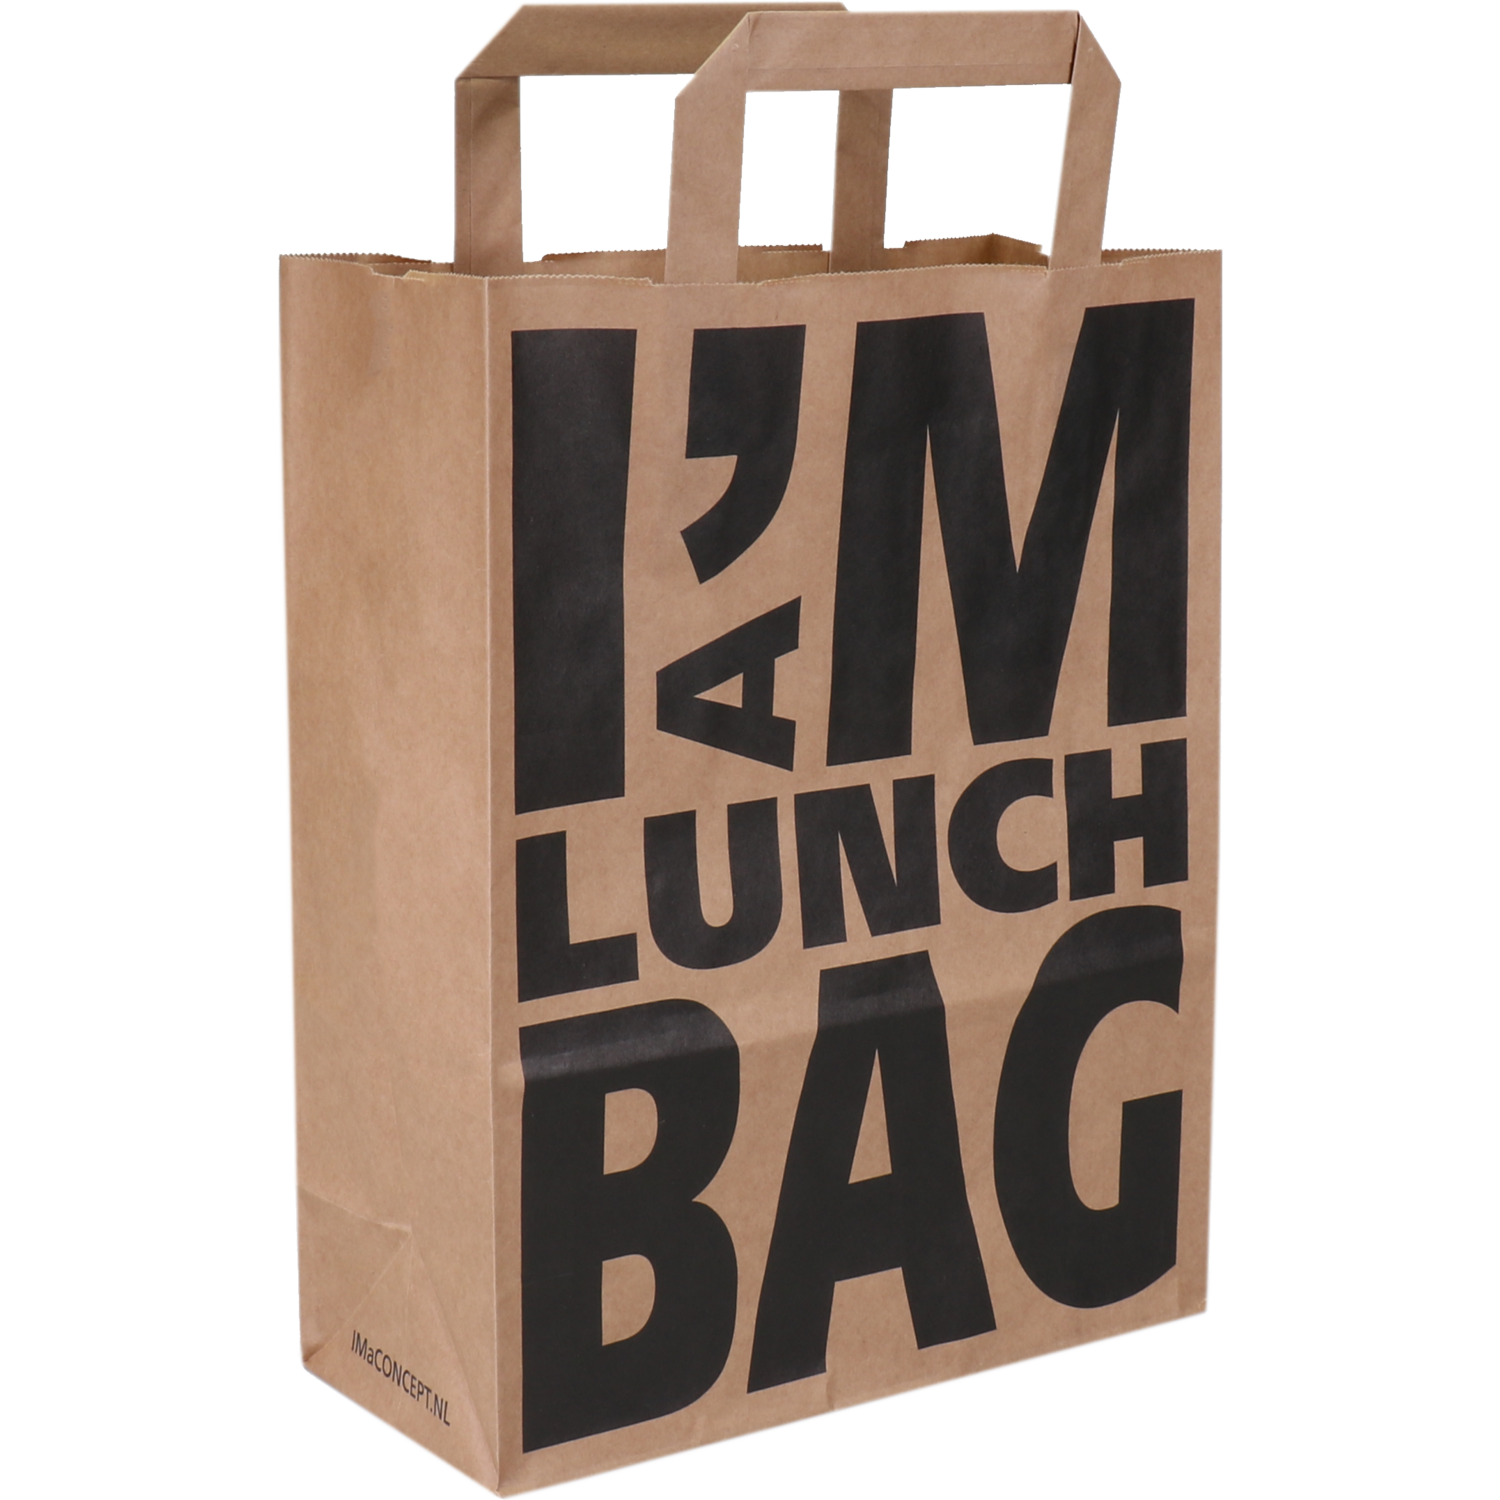 I'M Concept Bag, Pulp, flat paper handles, 22xSide fold 10x28cm, paper carrier bag, brown  1